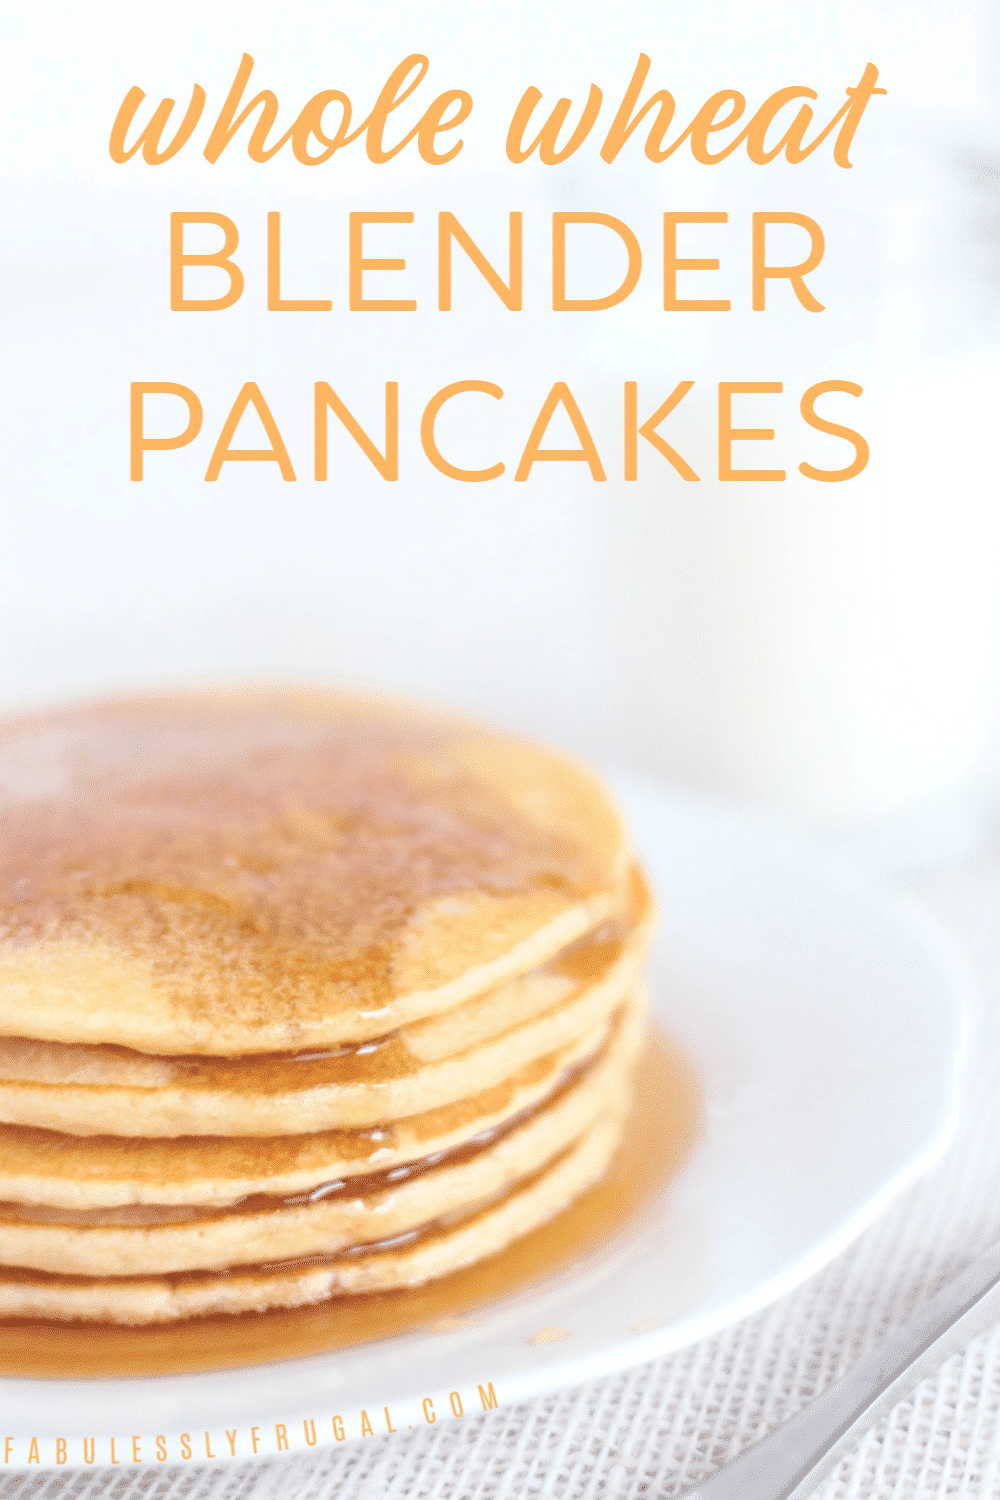 Whole wheat blender pancakes